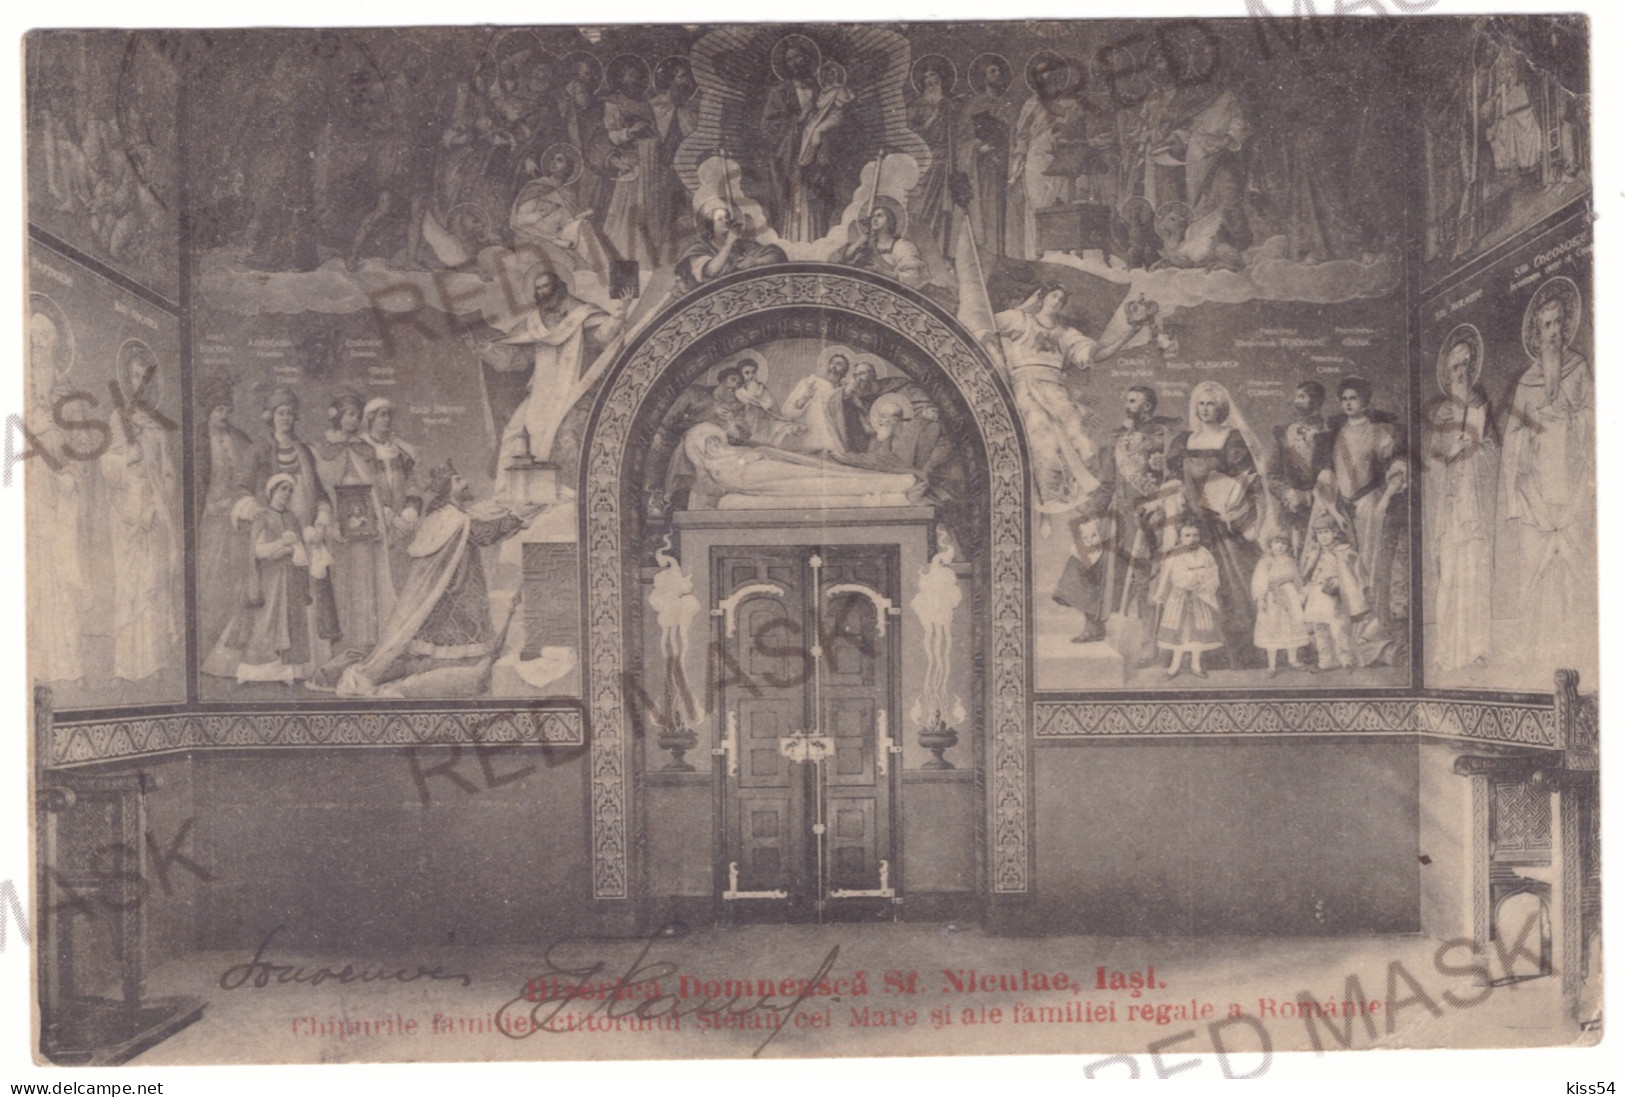 RO 40 - 21059 IASI, Royal Family, Church Sf. Nicolae, Romania - Old Postcard - Used - 1906 - Romania